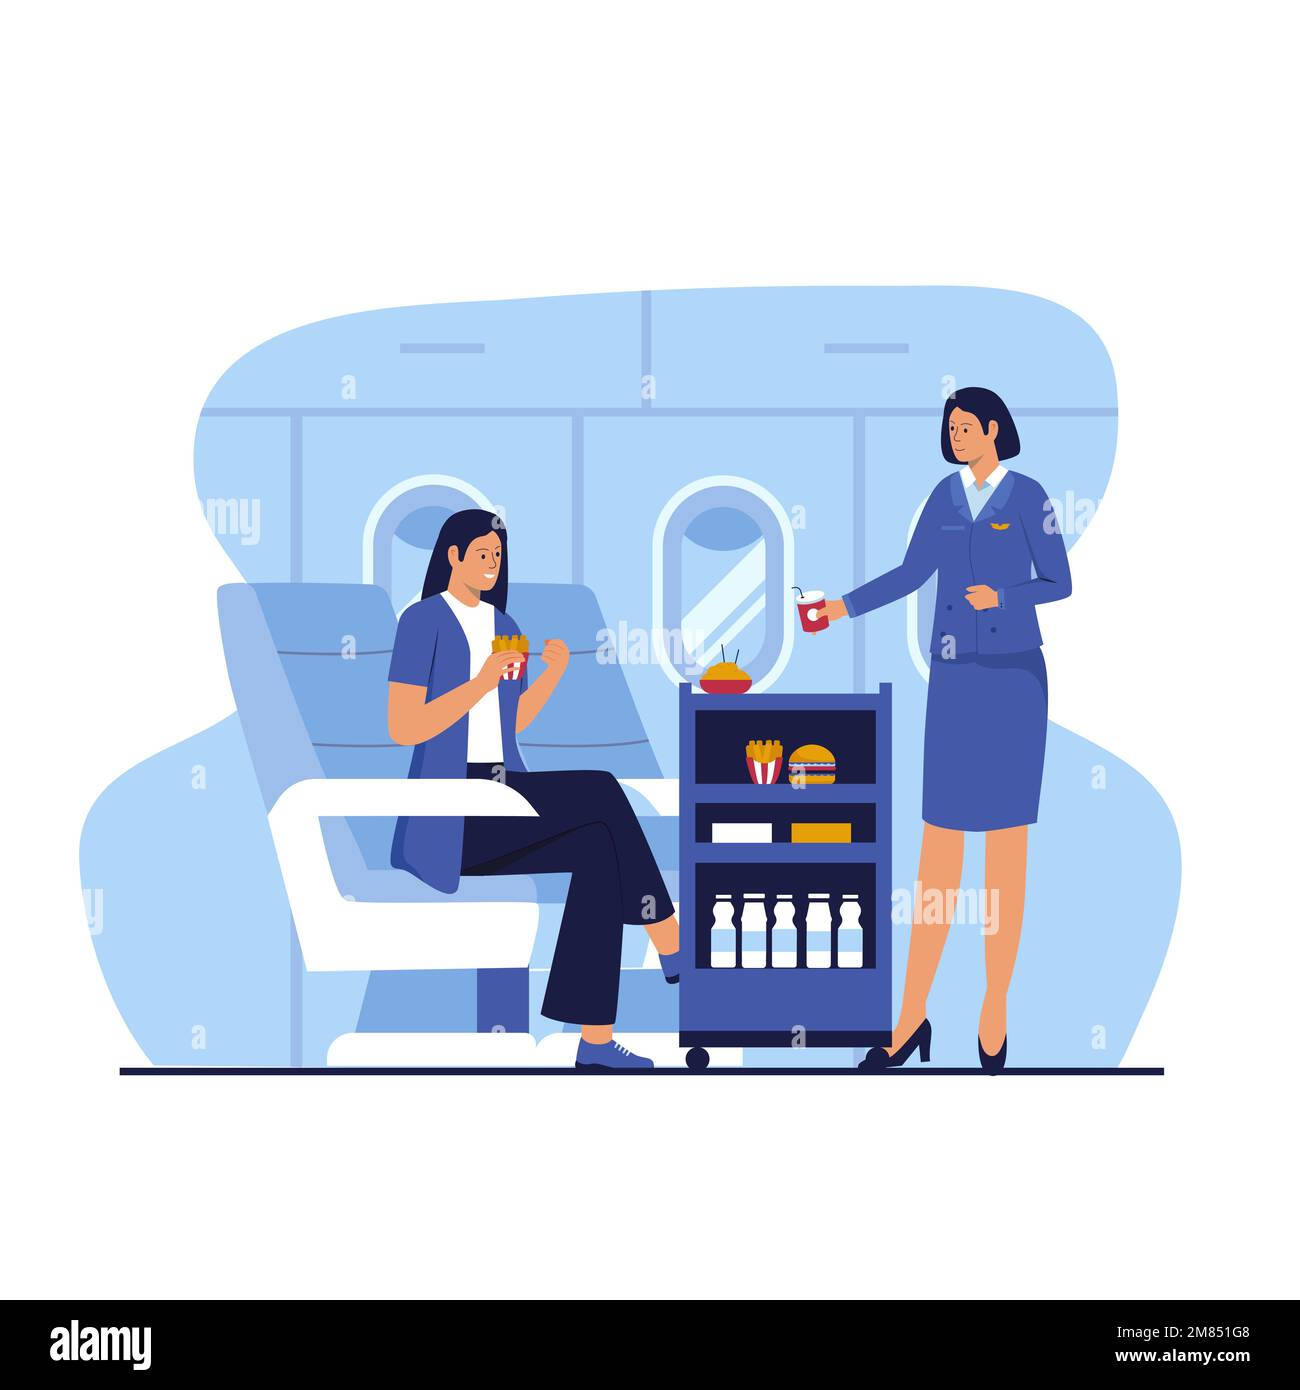 Flight attendants serve passengers on the plane. Illustration for website, landing page, mobile app, poster and banner. Stock Vector